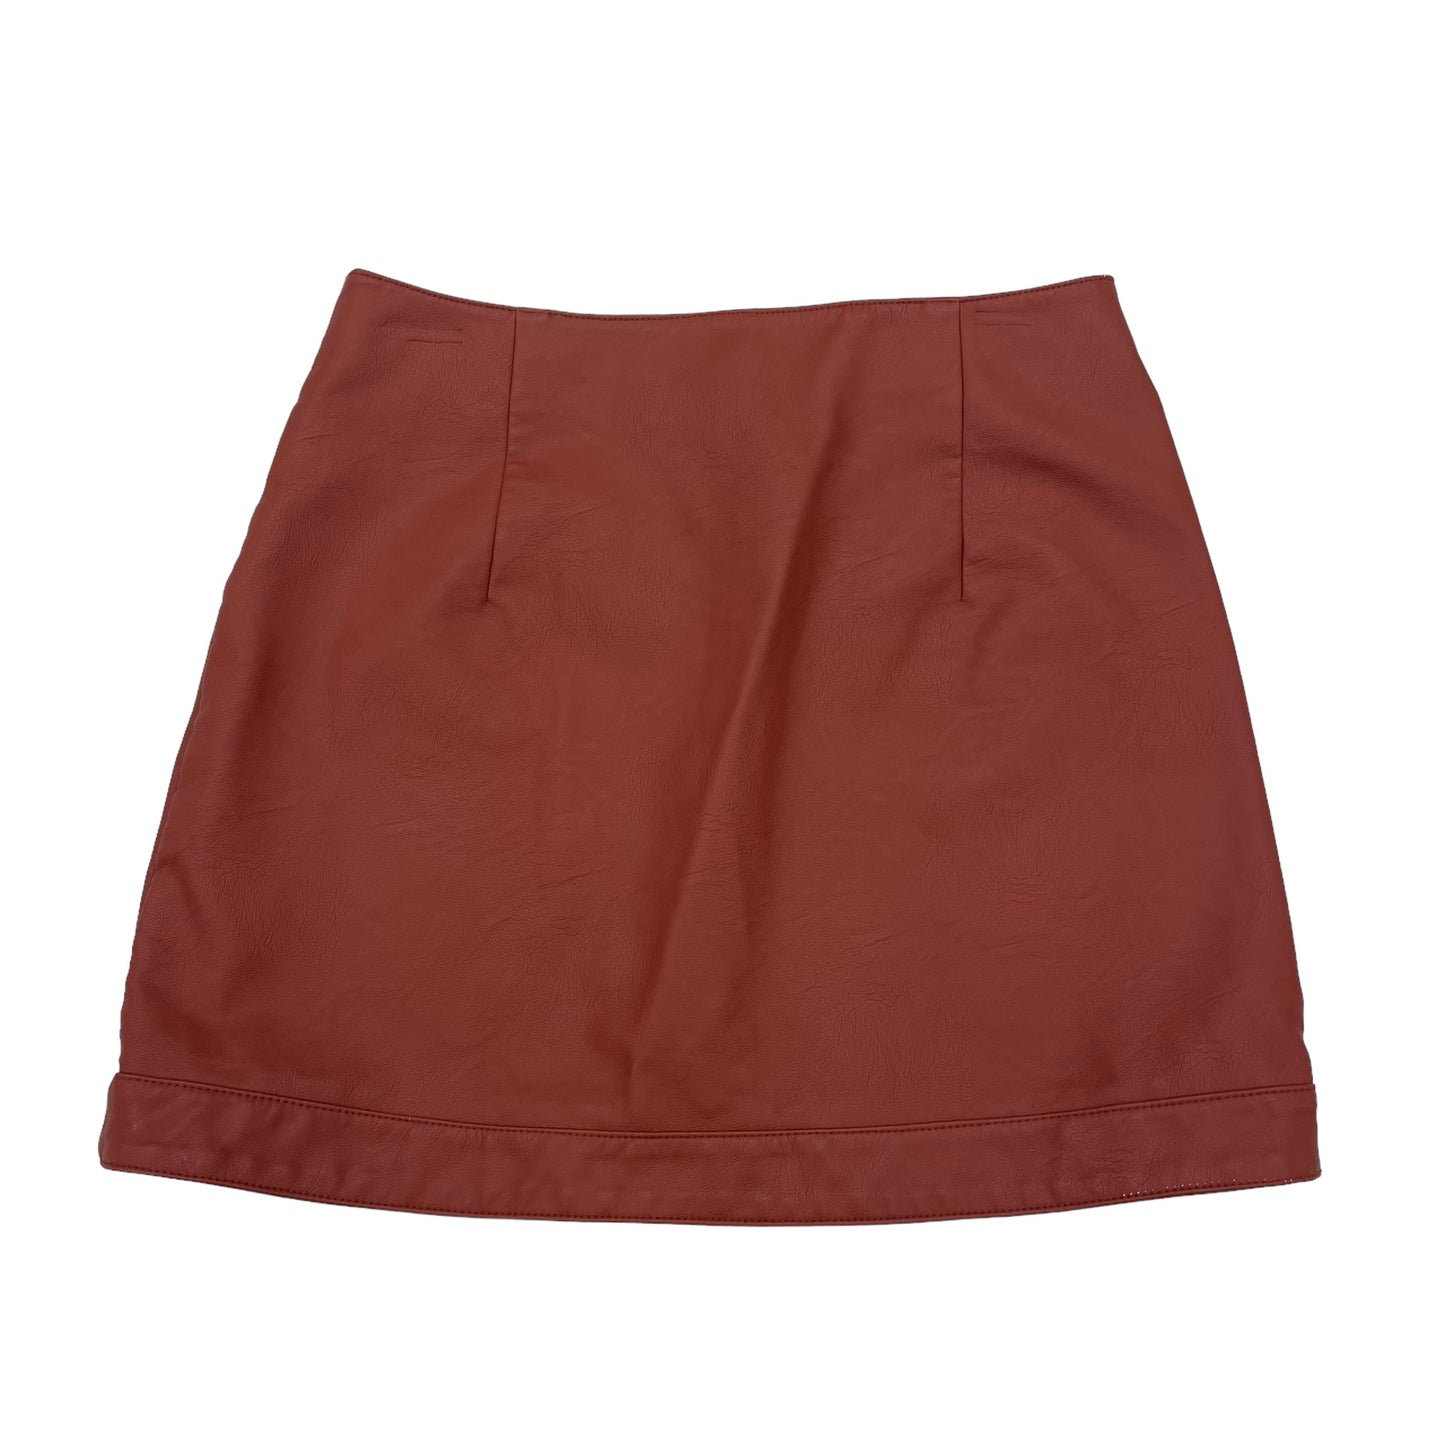 Red Skirt Mini & Short Top Shop, Size 8